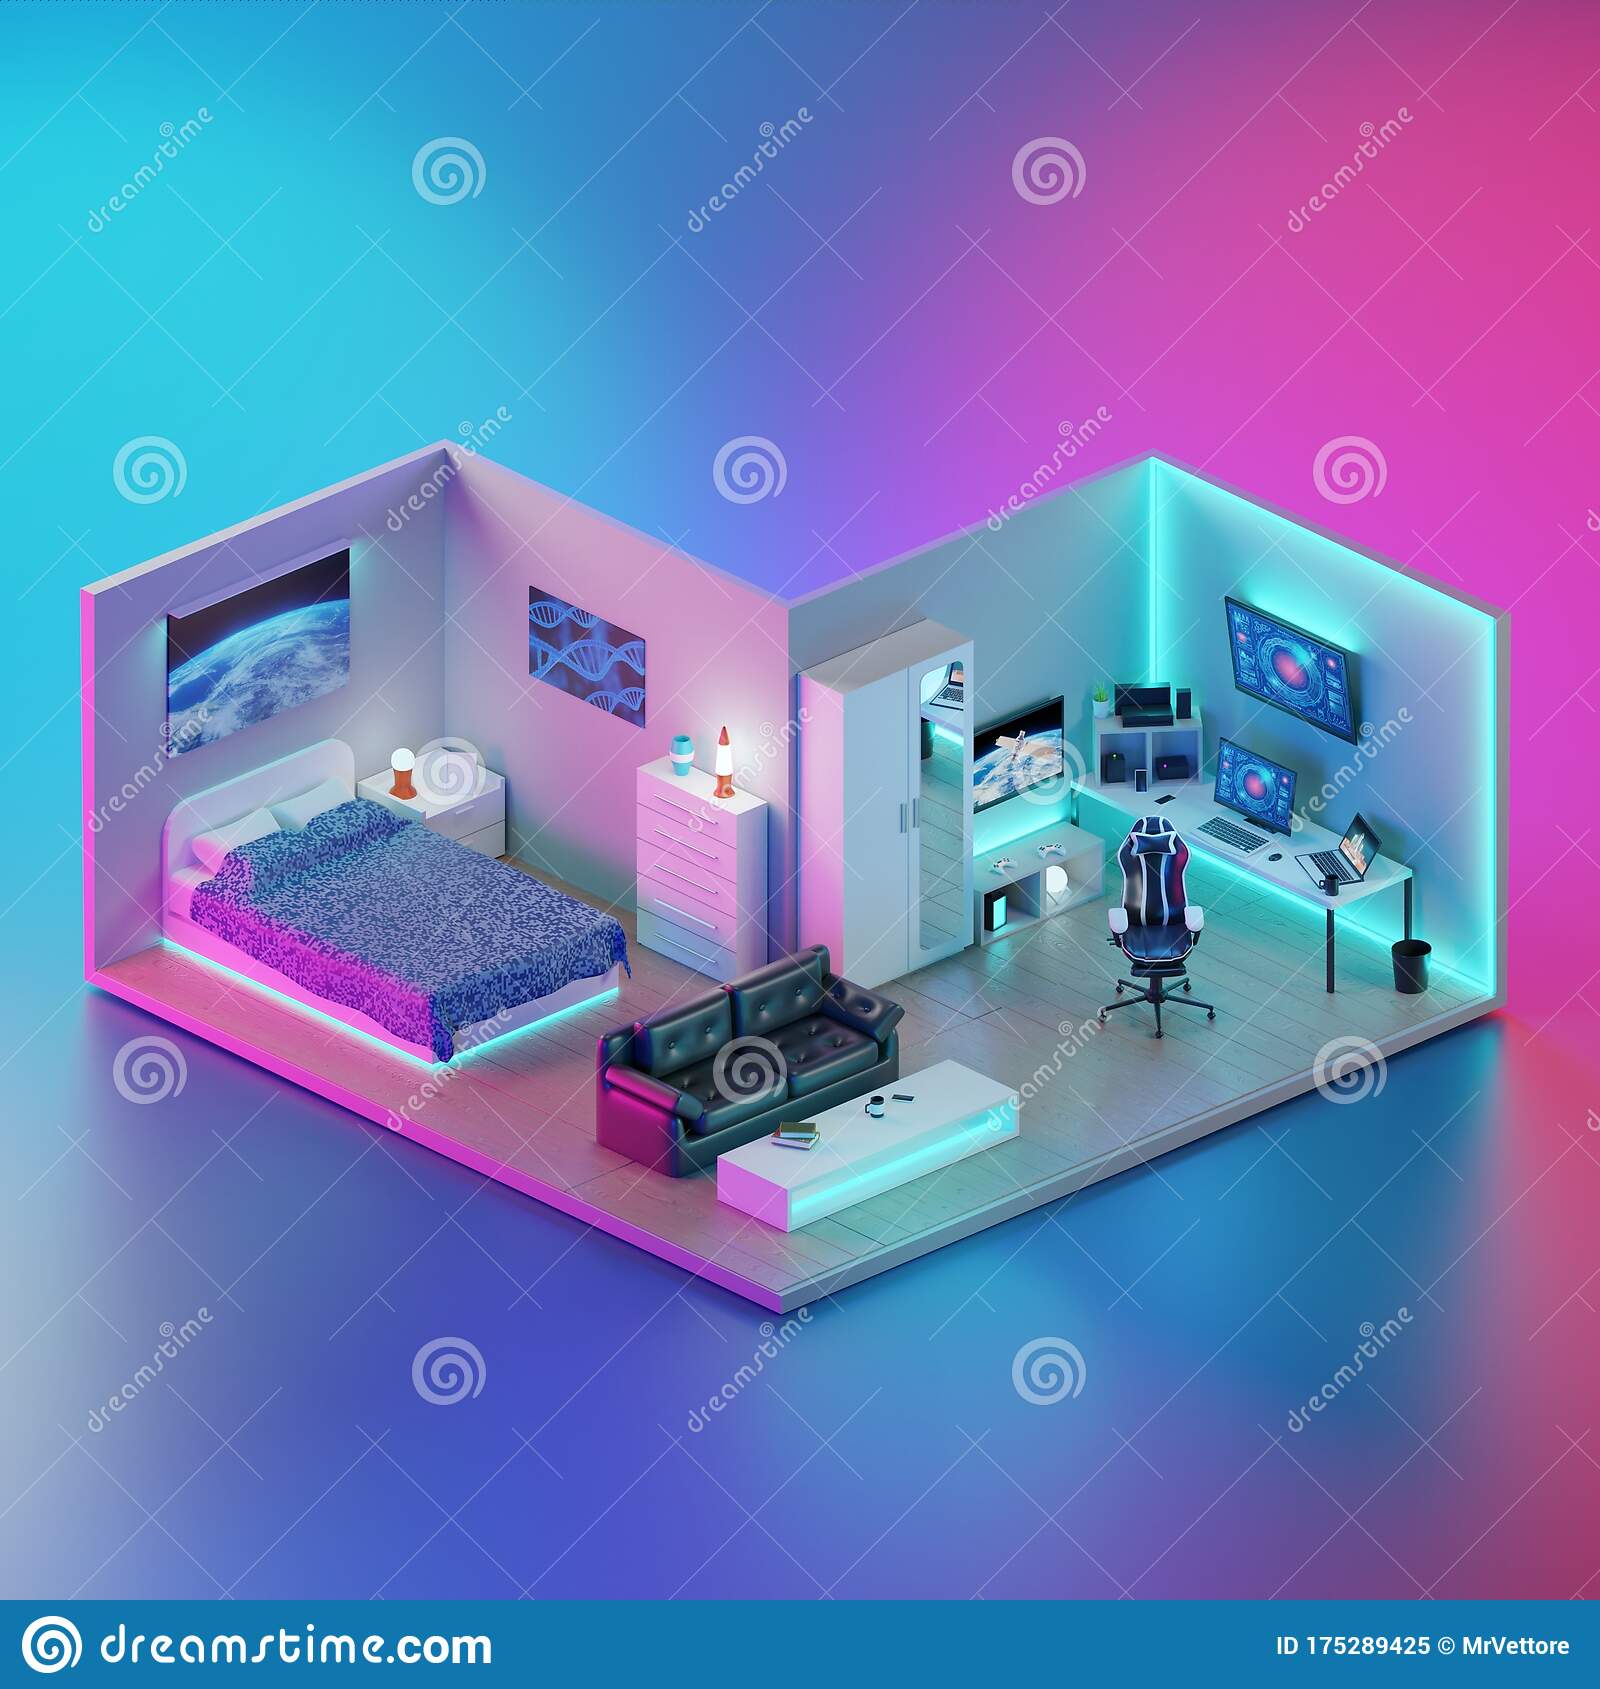 gamer room design